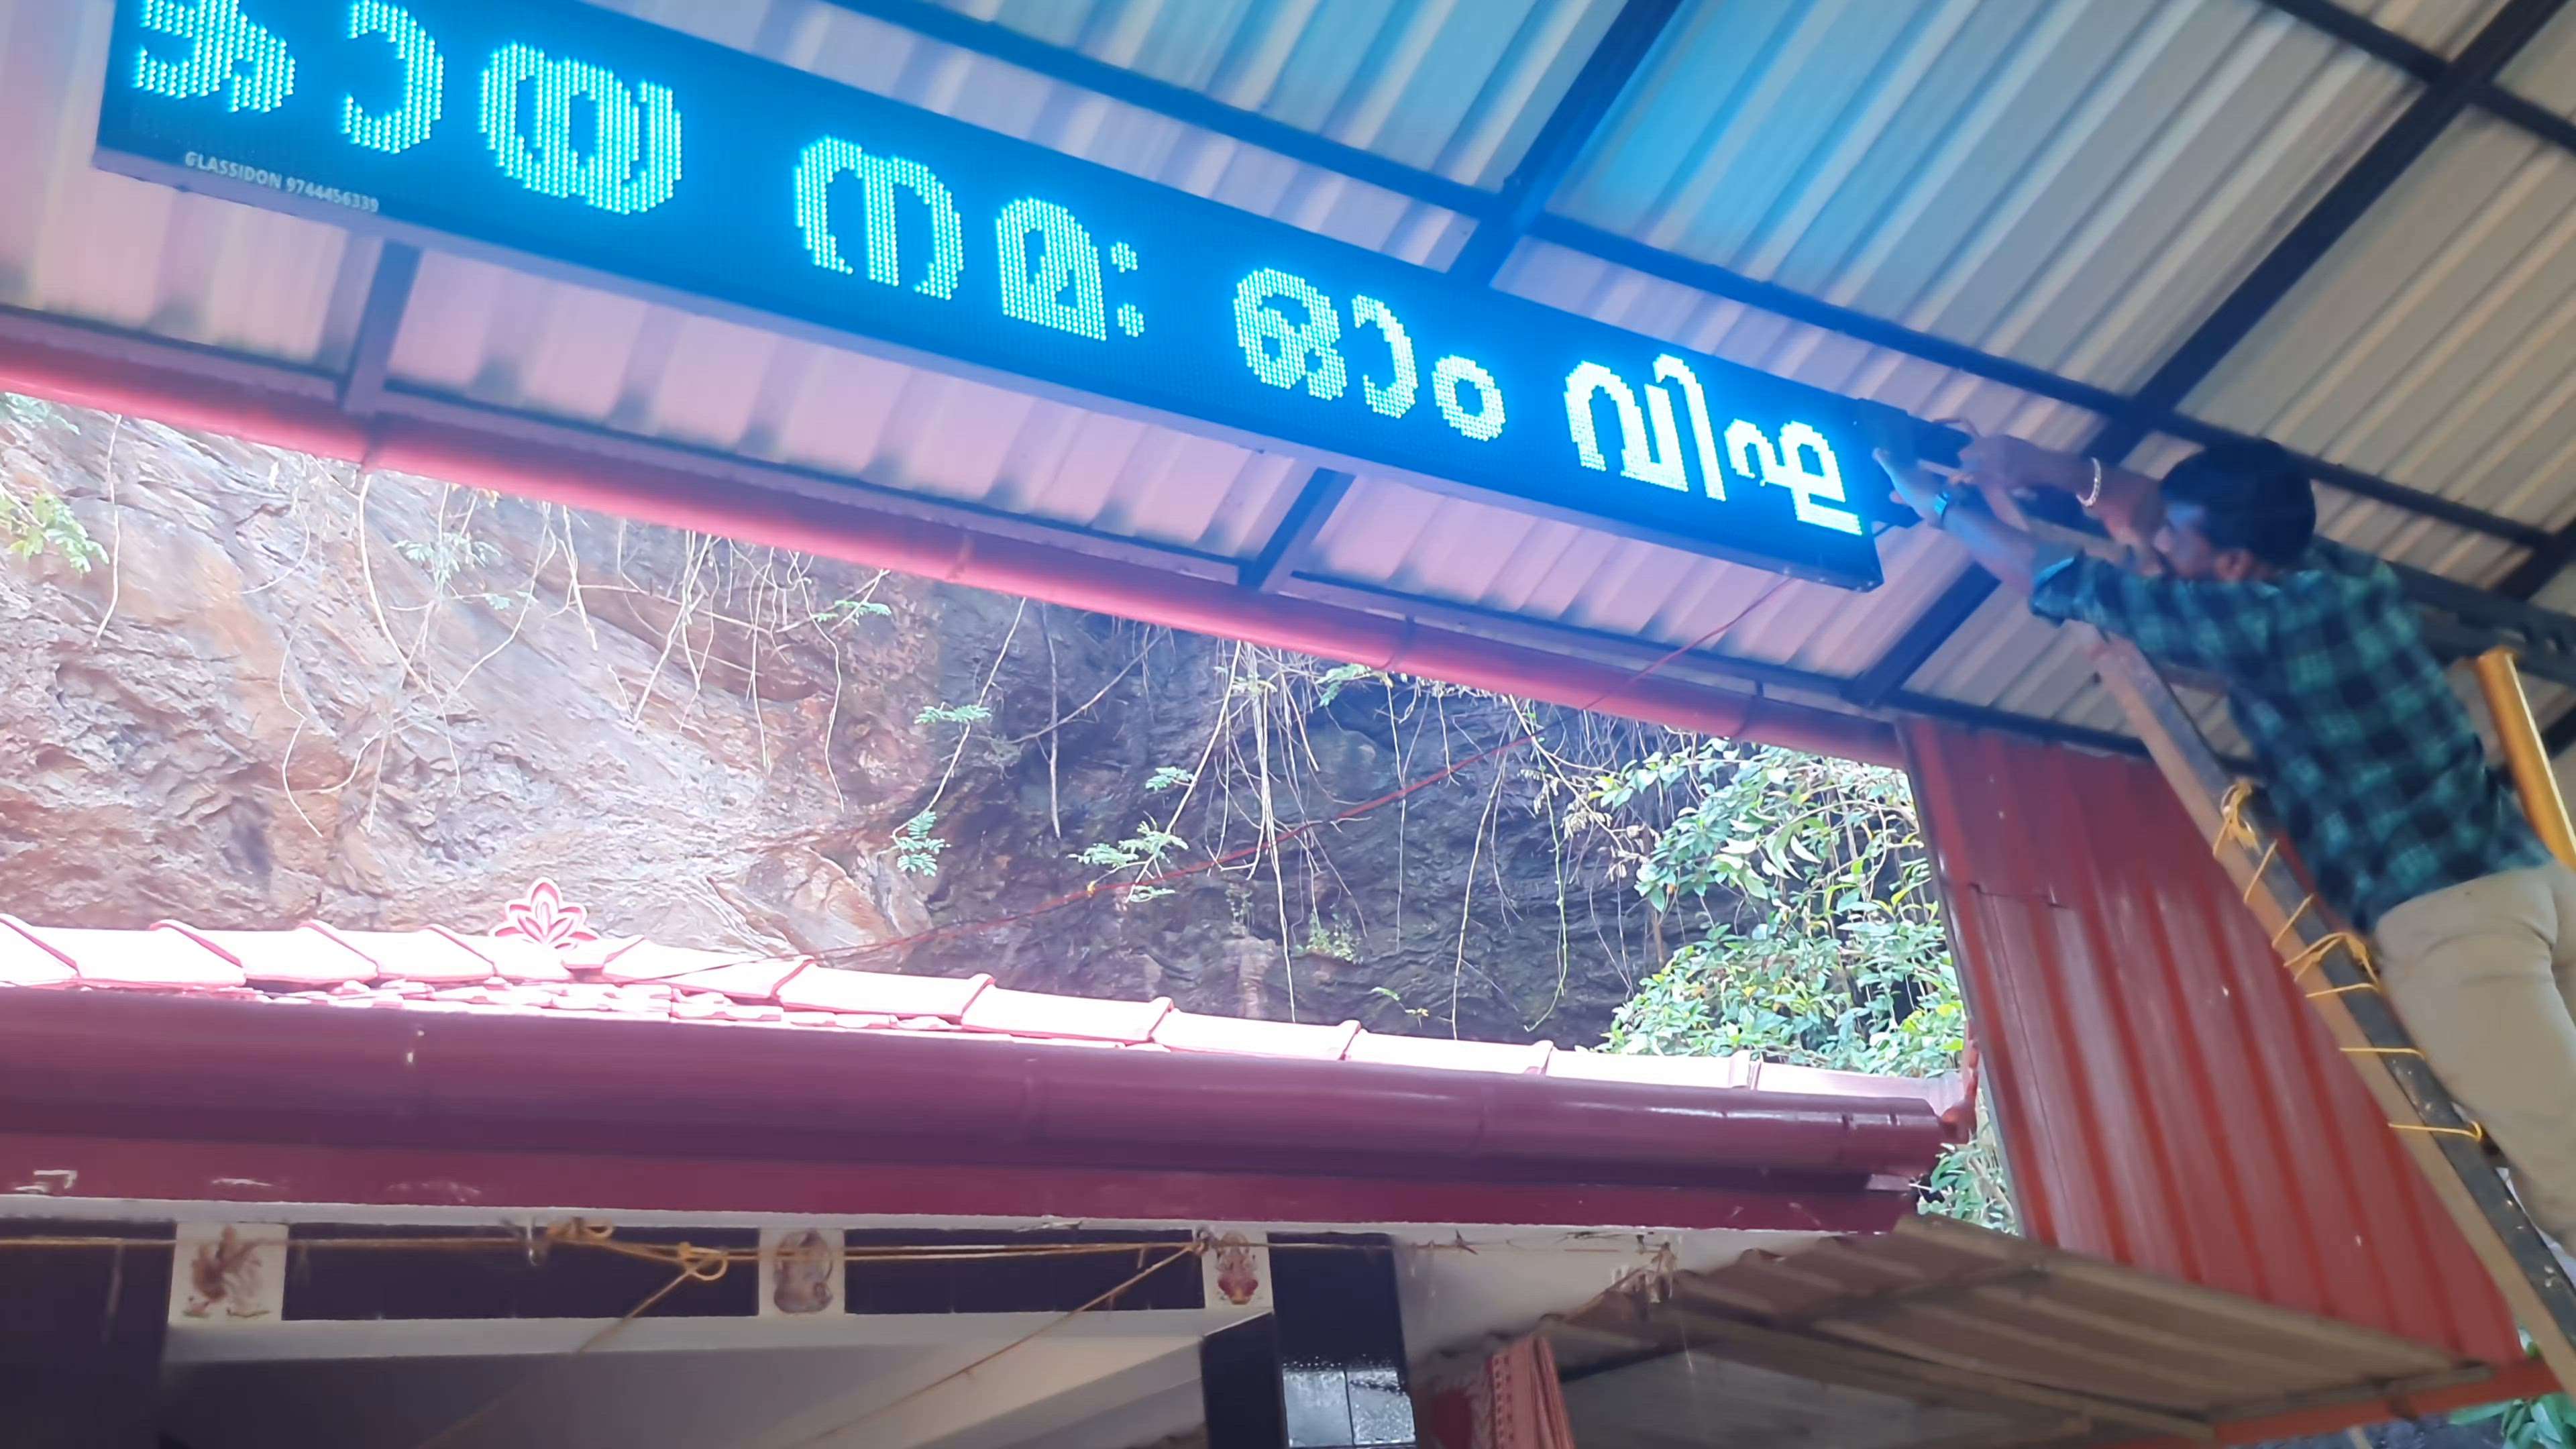 # ariyoora temple villiappally #rgb scrolling led sign